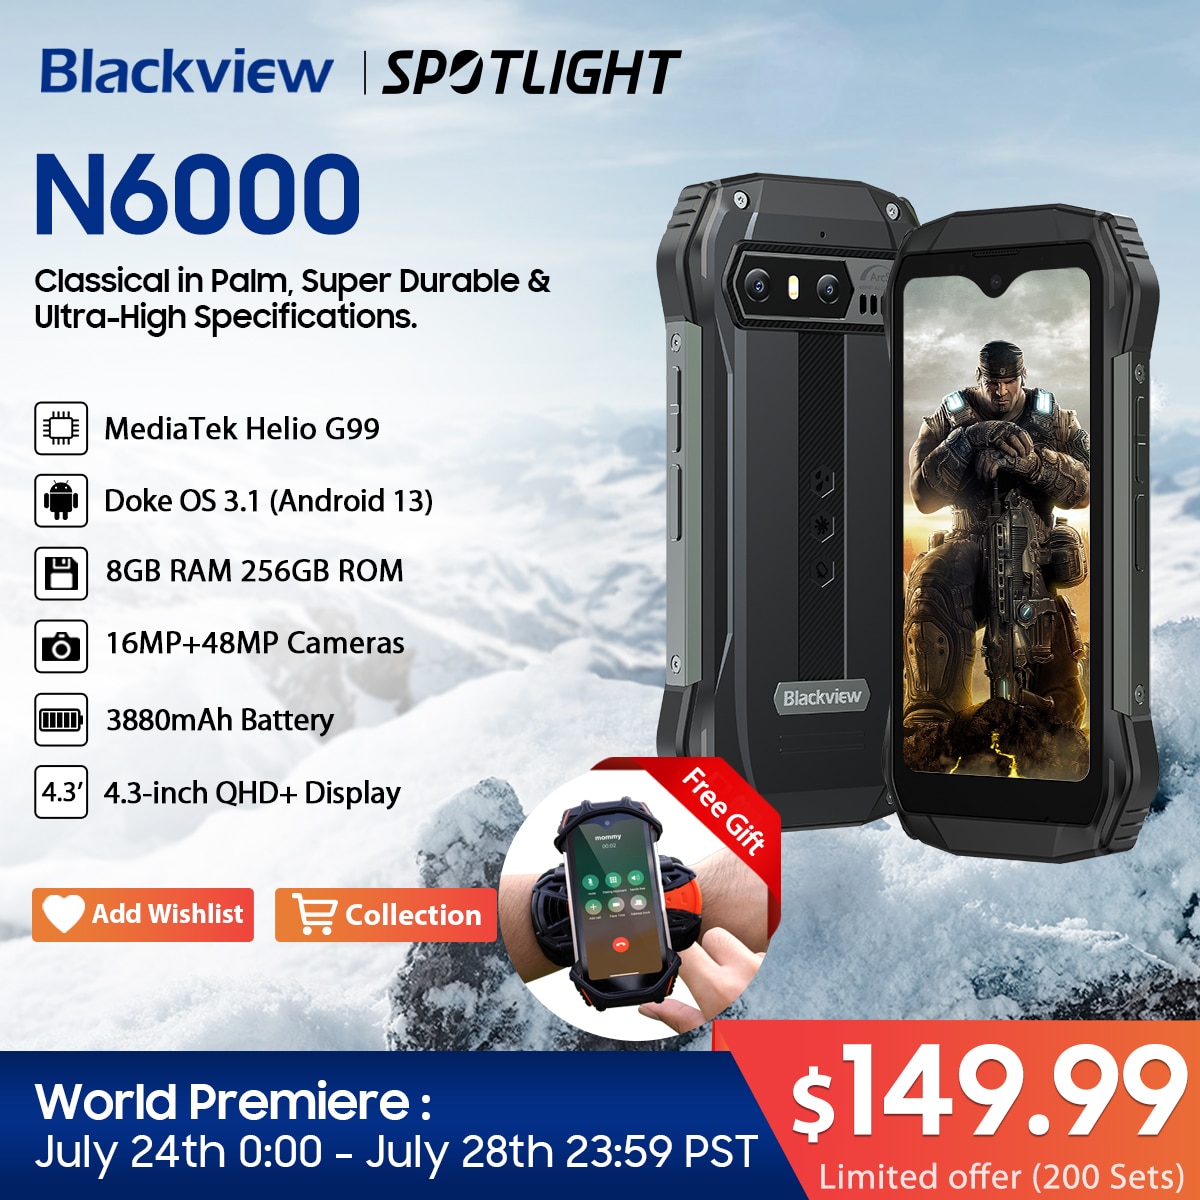 BLACKVIEW Celular Blackview N6000 16GB+256GB 48MP Cámara, 4.3 QHD-Negro